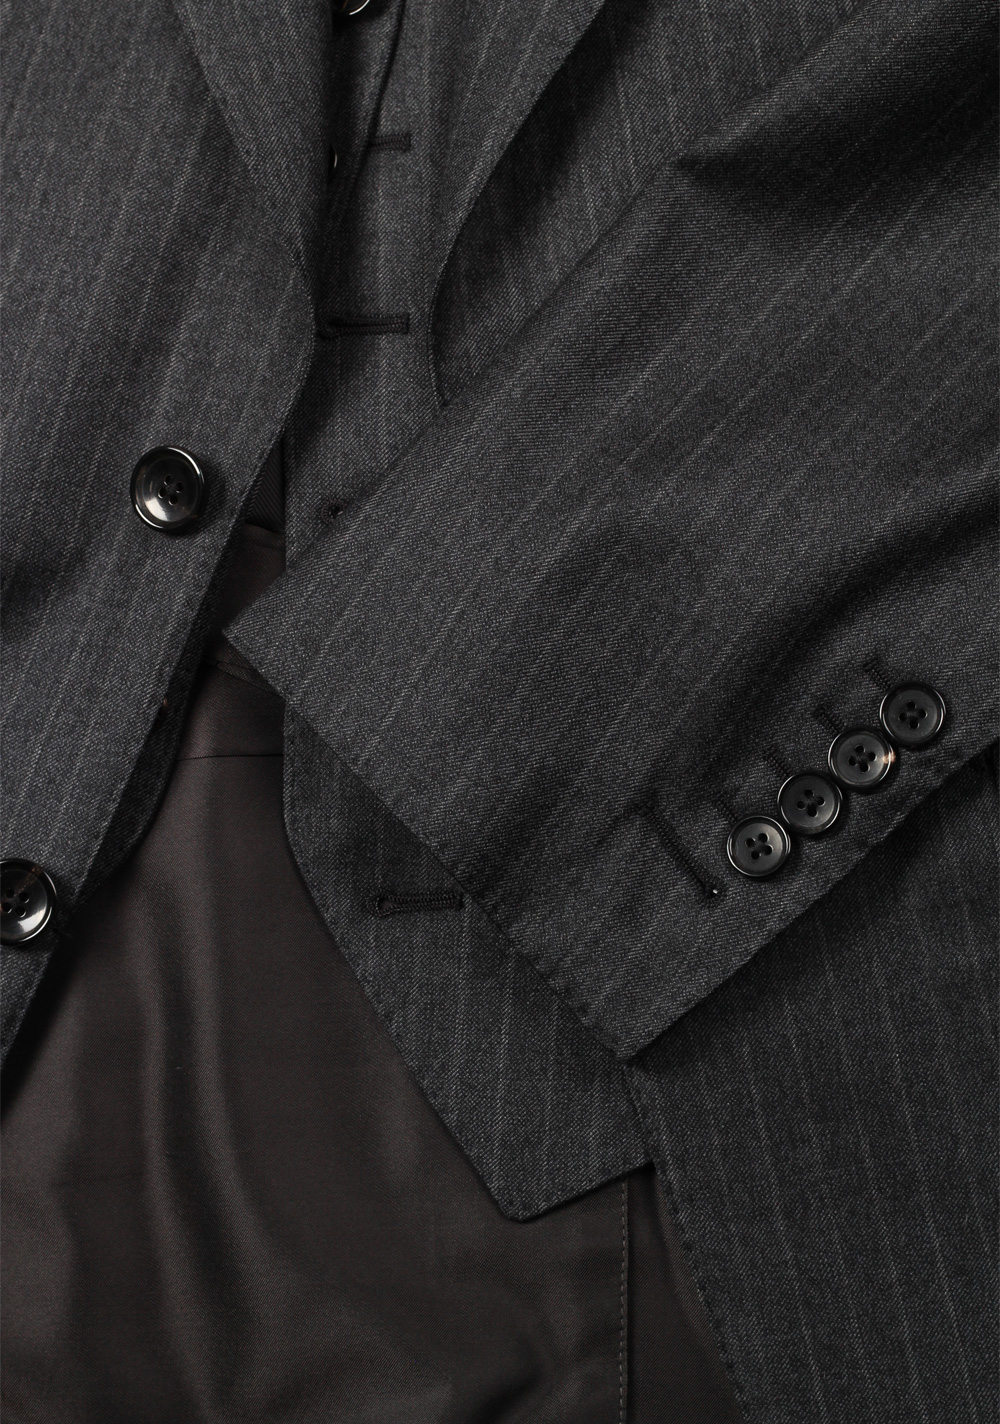 TOM FORD Shelton Gray Striped 3 Piece Suit Size 46 / 36R U.S. Wool | Costume Limité